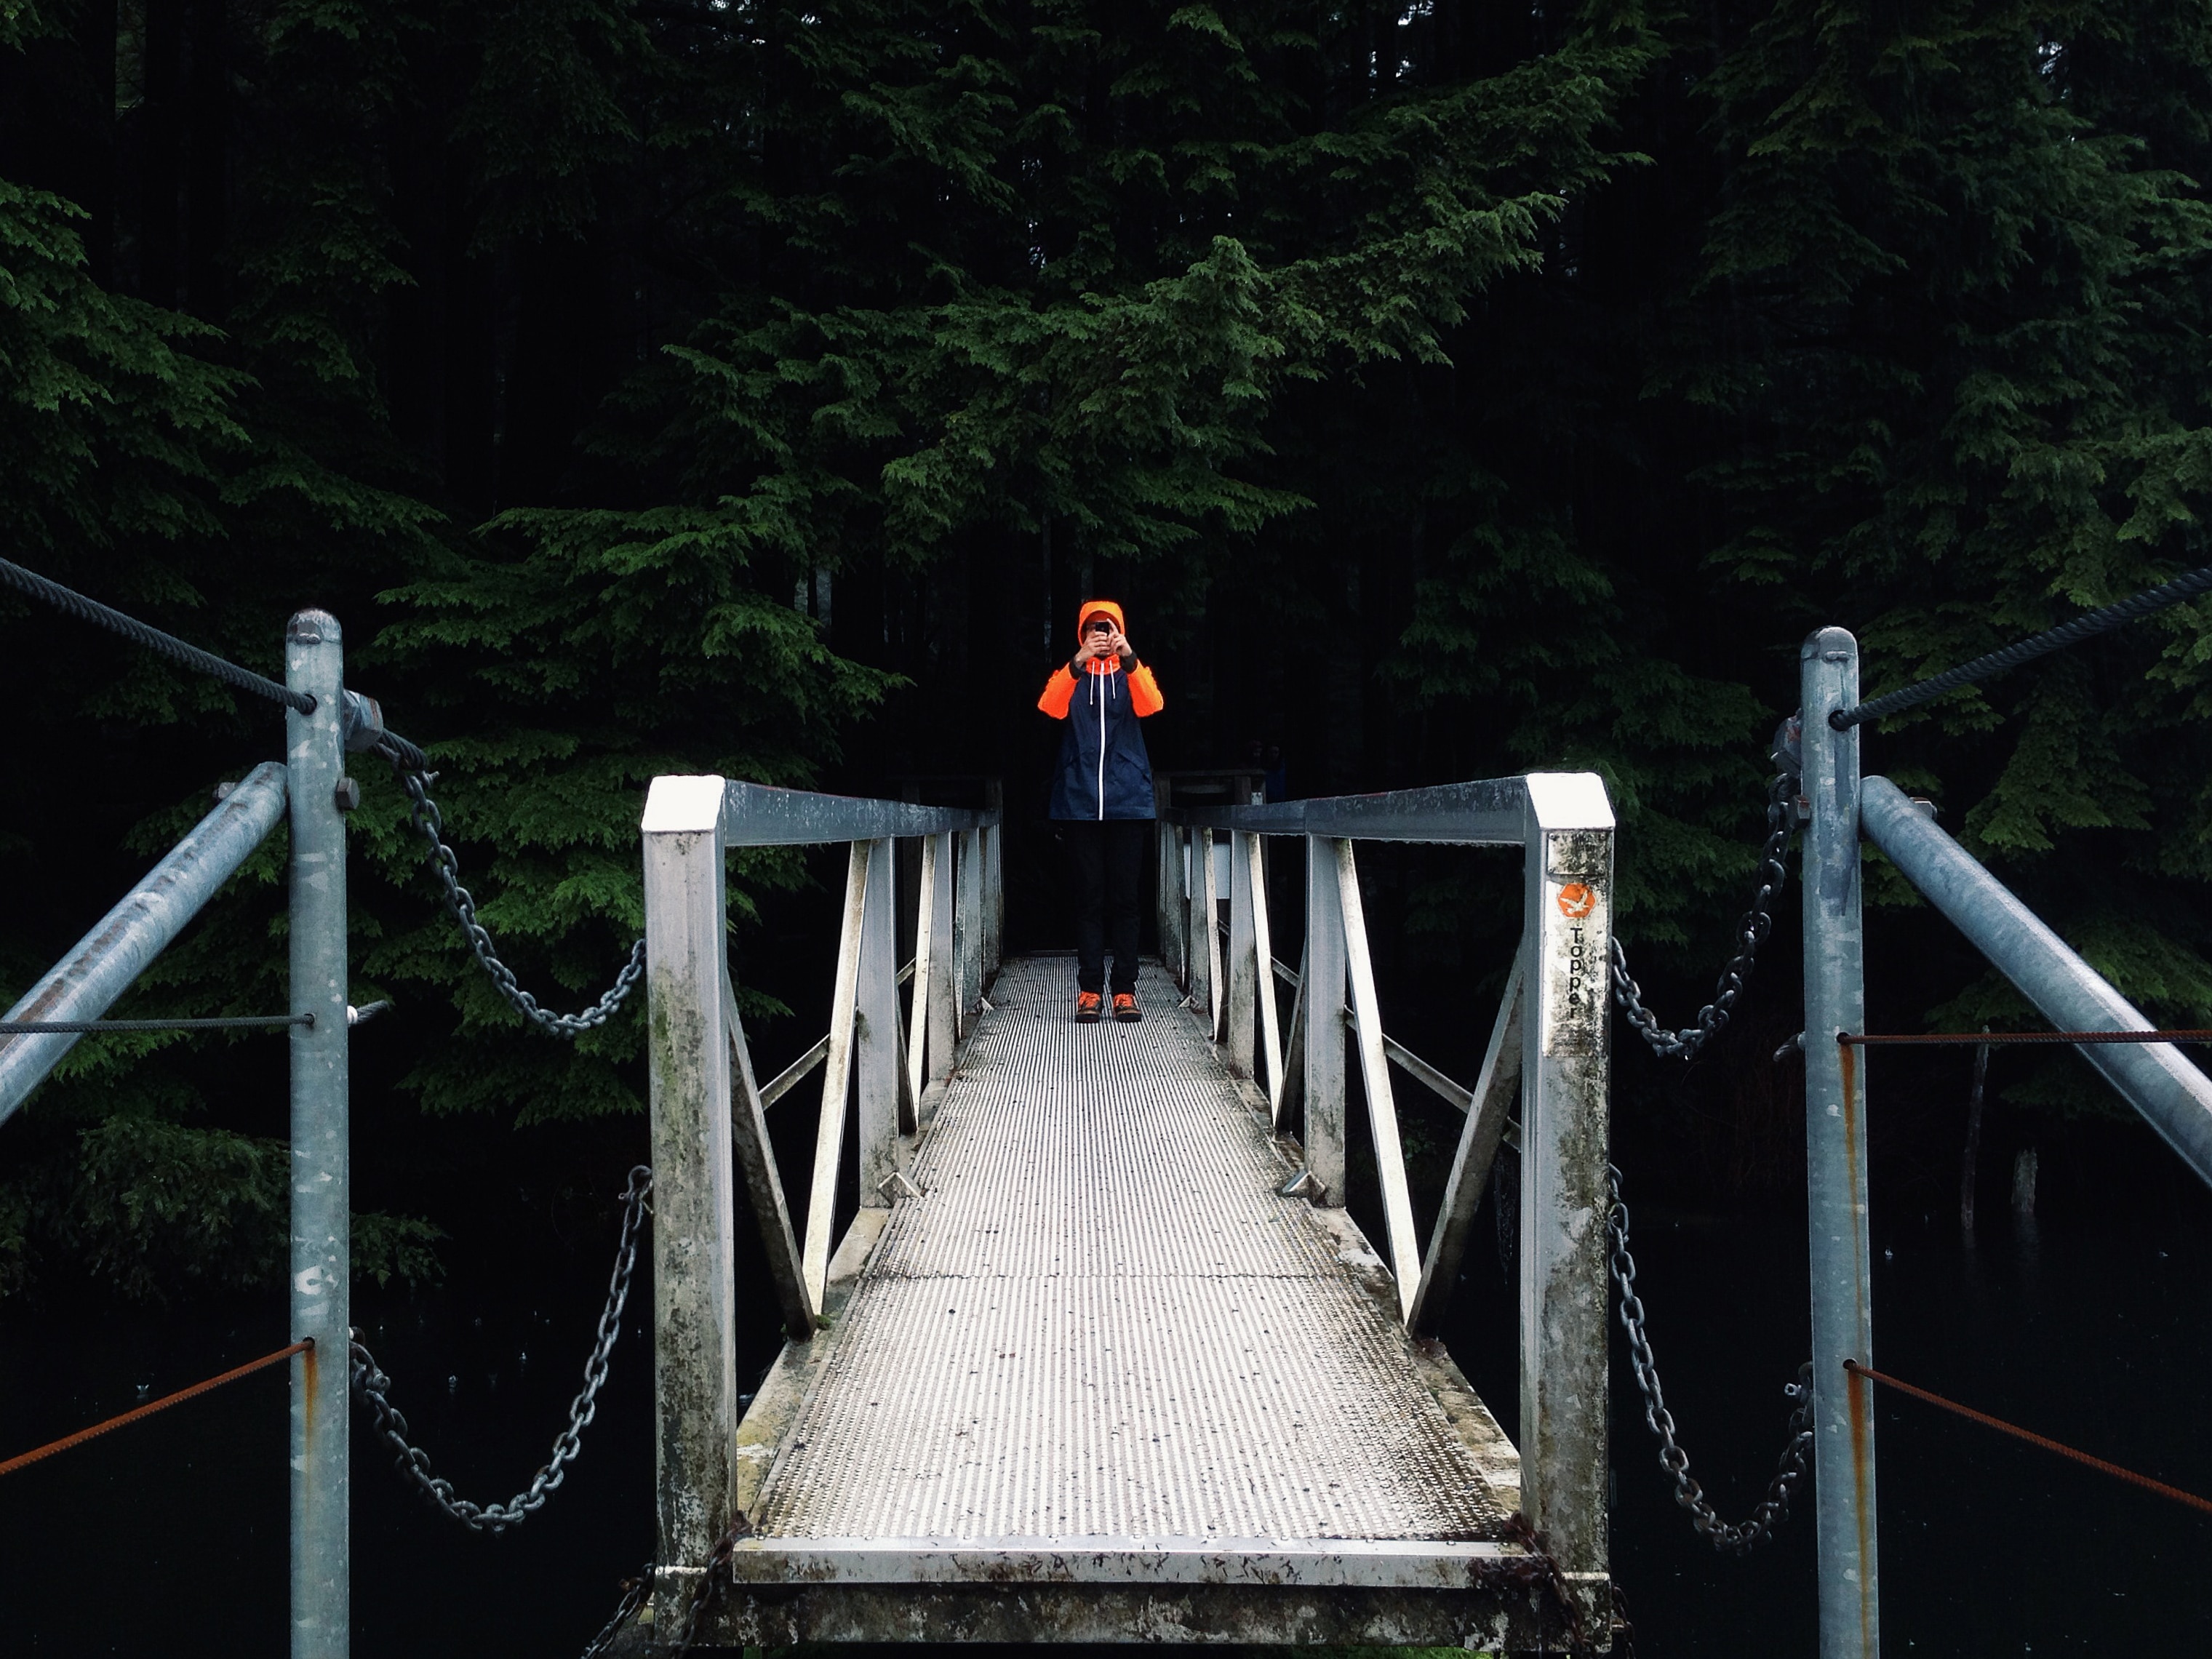 person on the gray metal bridge near pine trees